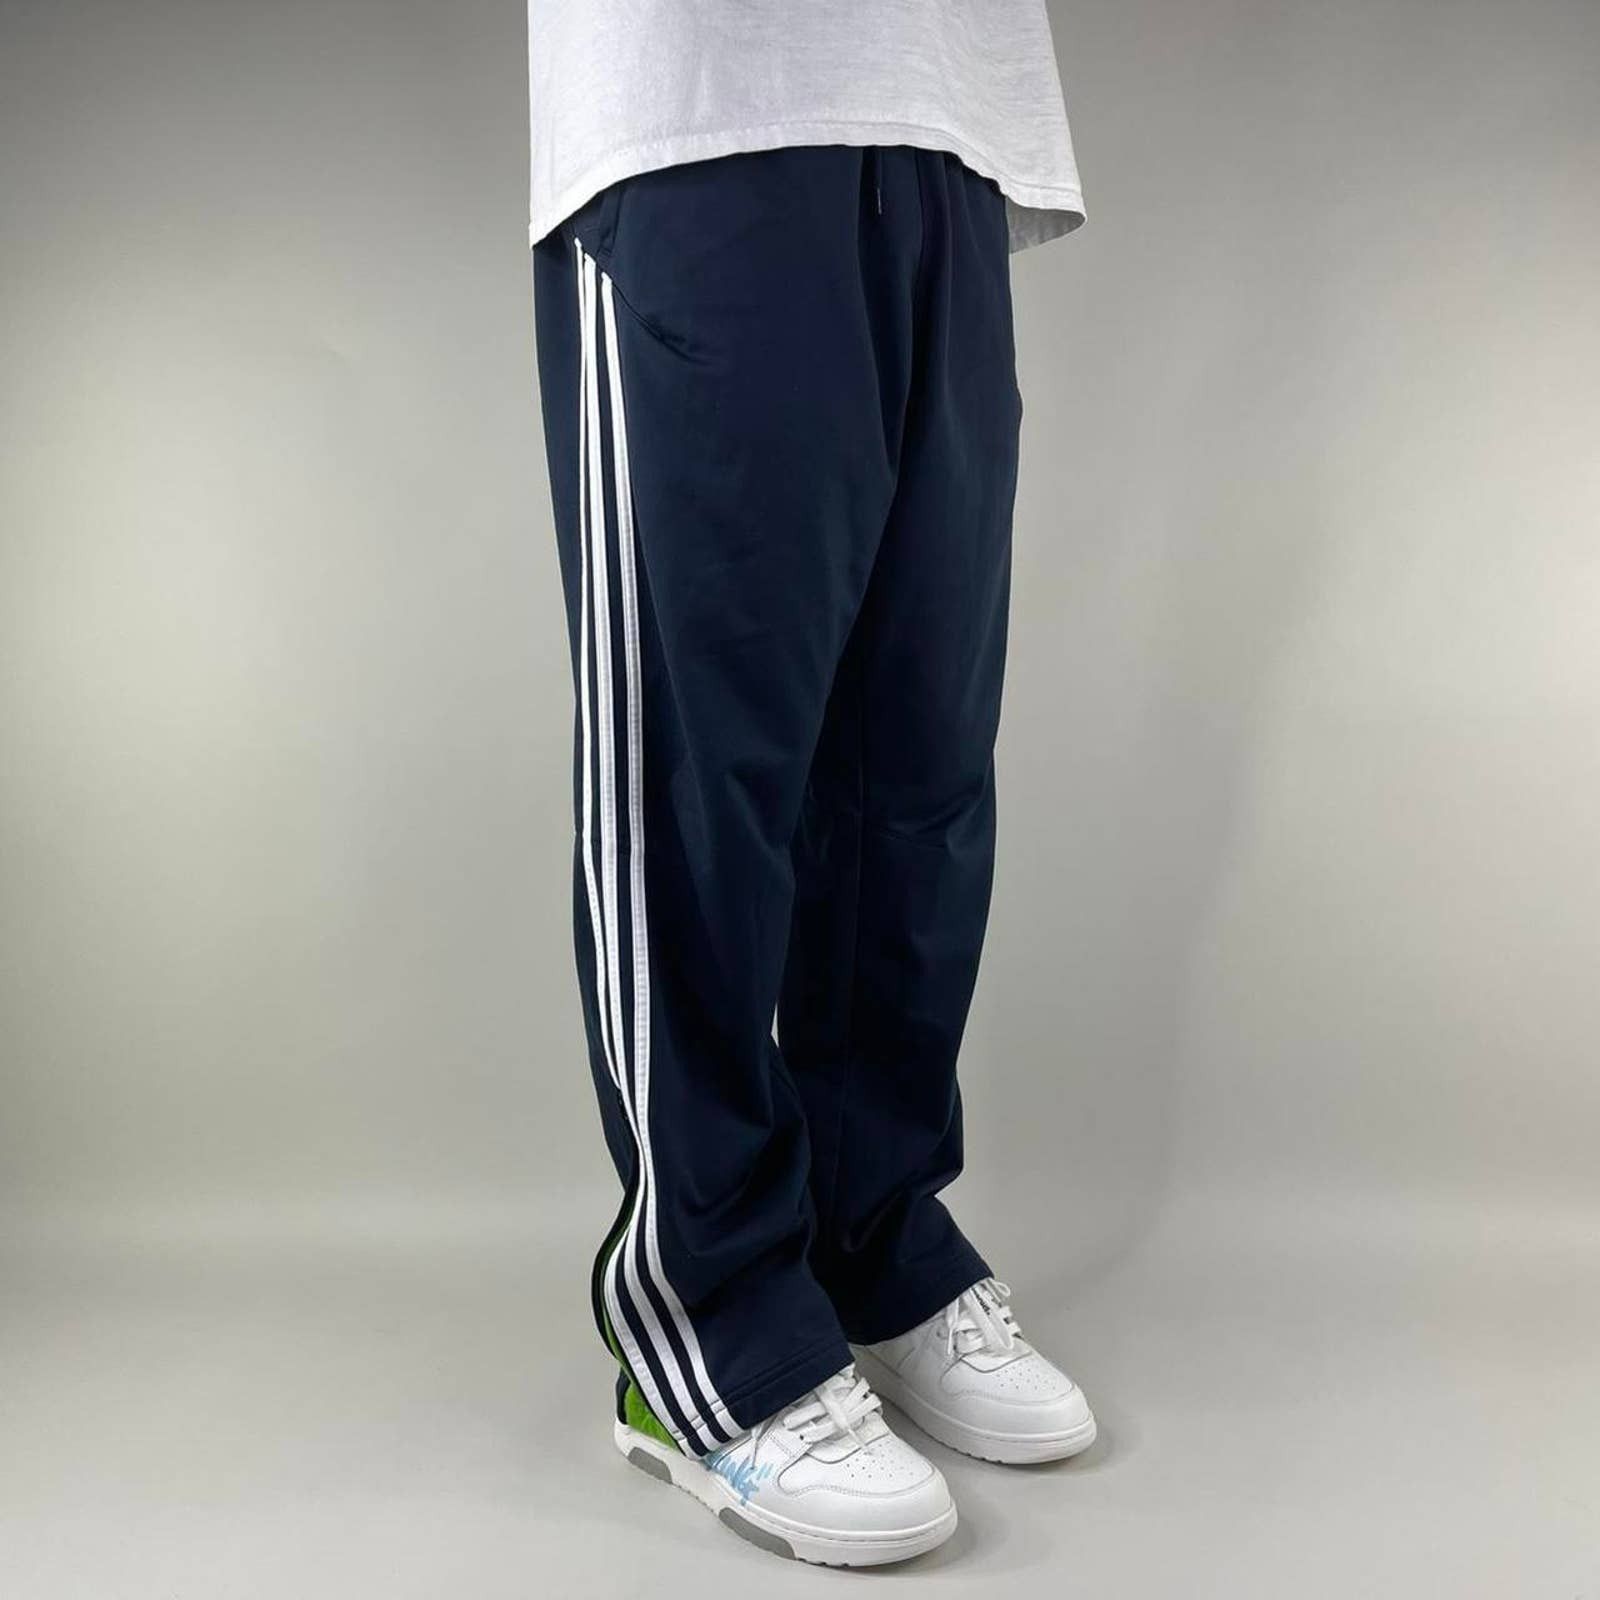 Adidas Super Sick Navy Blue Adidas Trackpants Size US 34 / EU 50 - 4 Preview